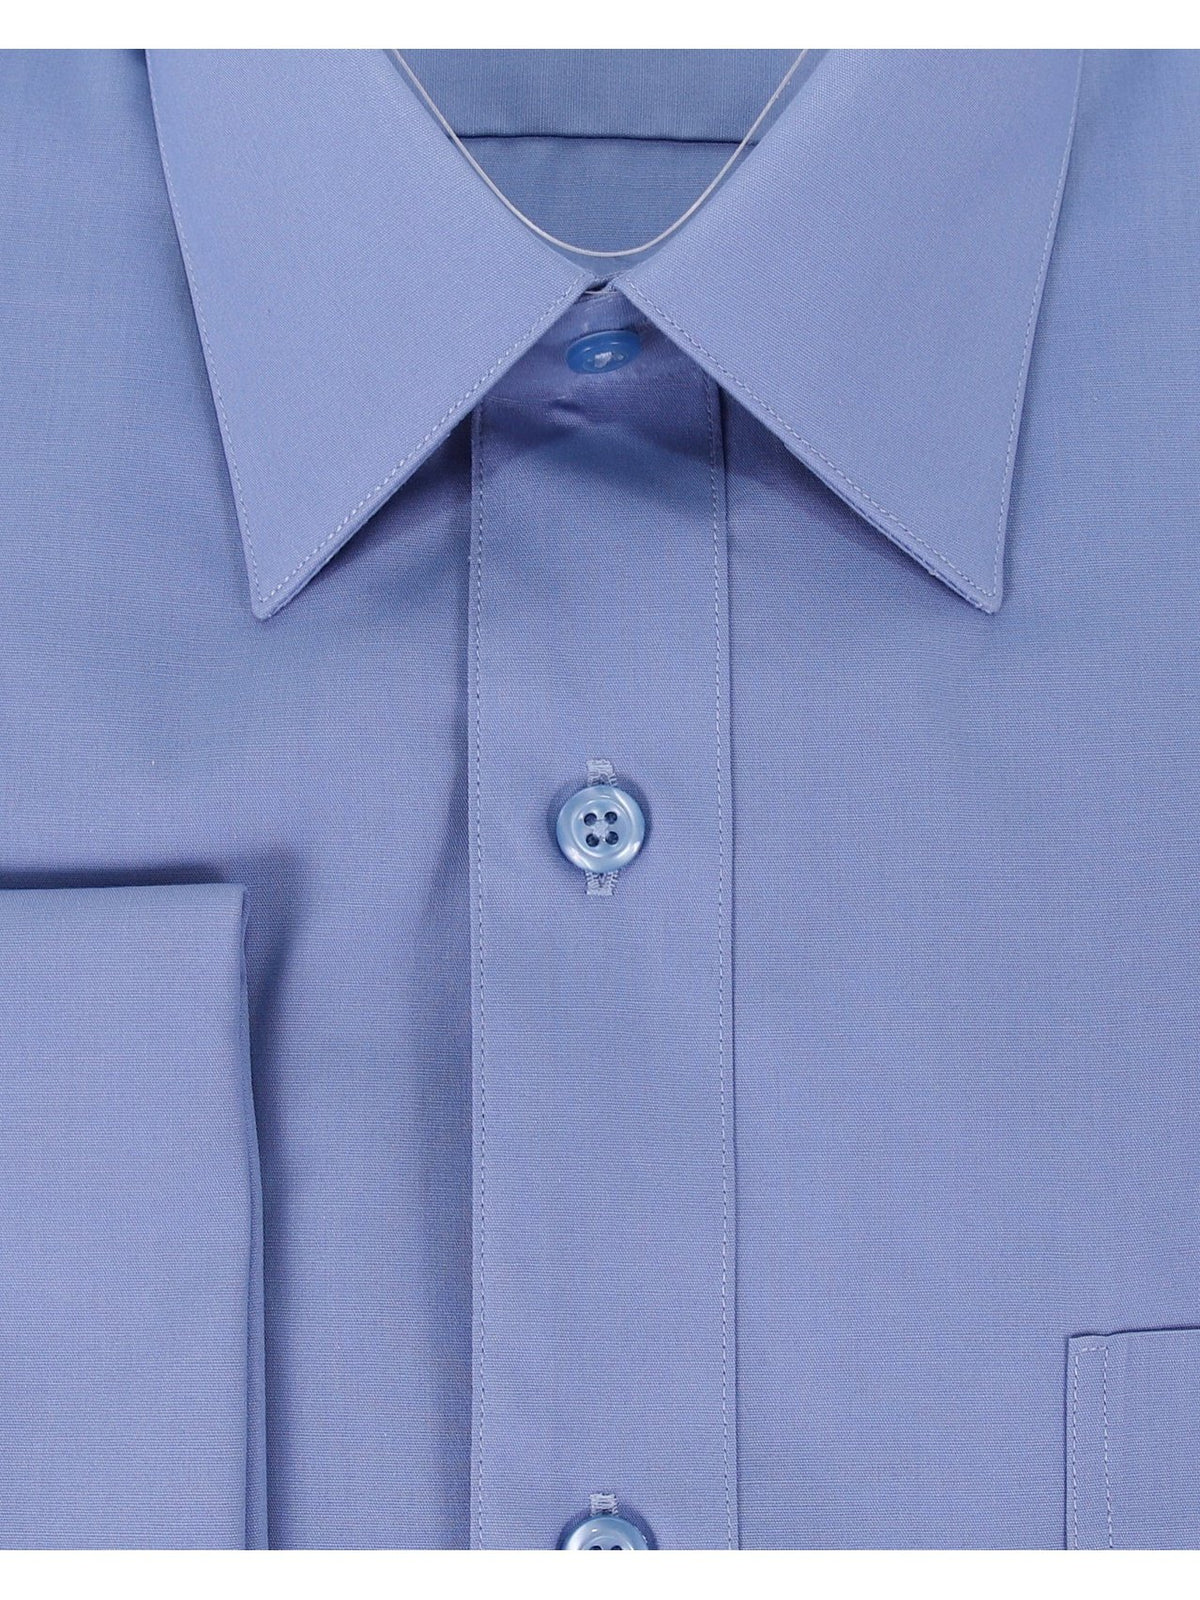 Brand M SHIRTS Mens Solid Blue Regular Fit Spread Collar French Cuff Dress Shirt